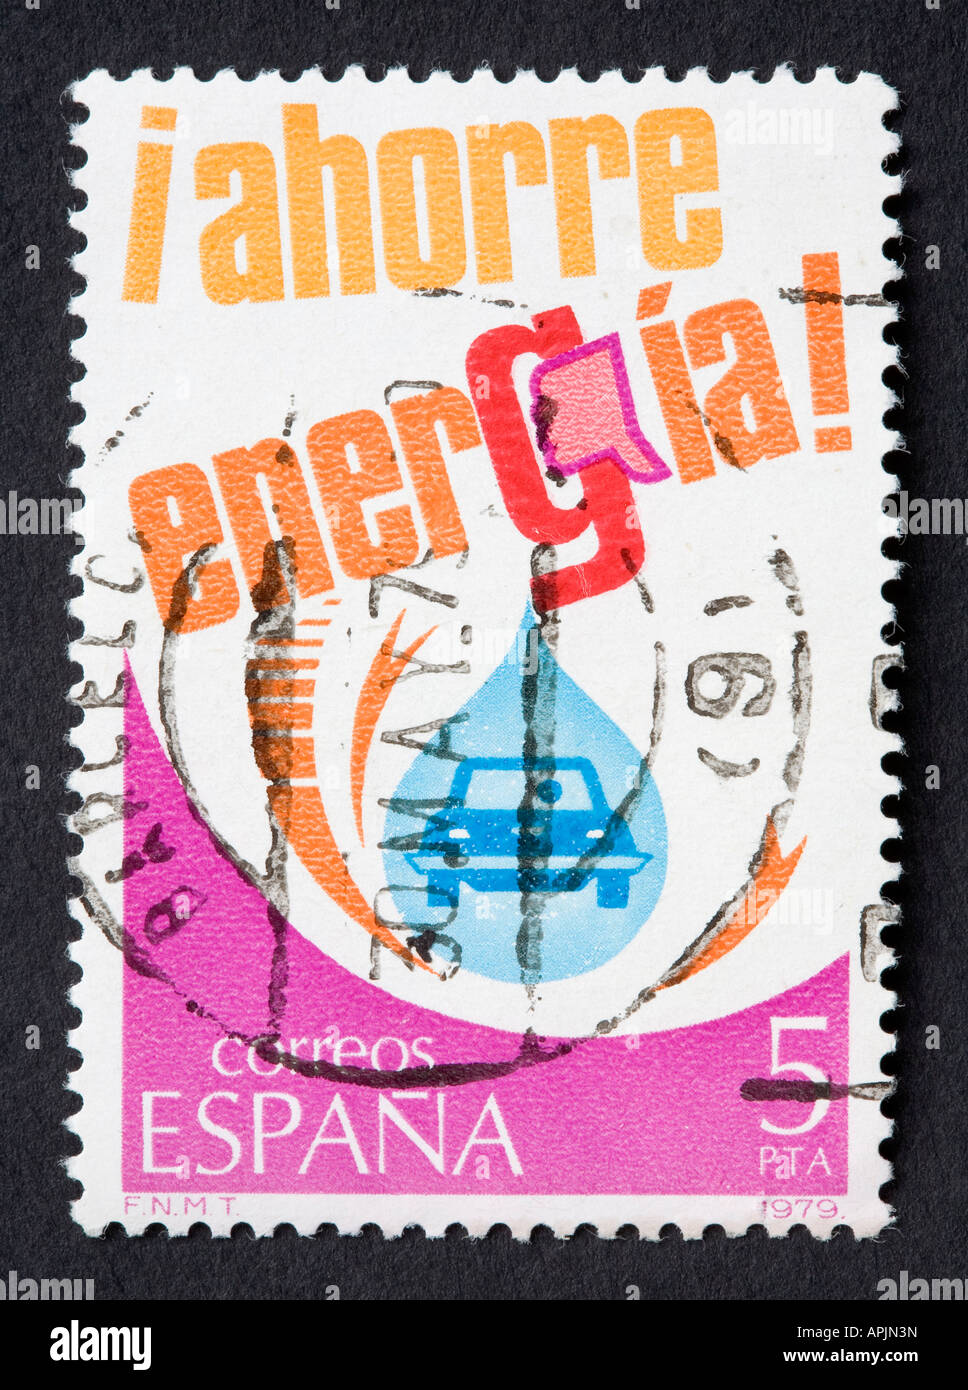 Spanish postage stamp Stock Photo